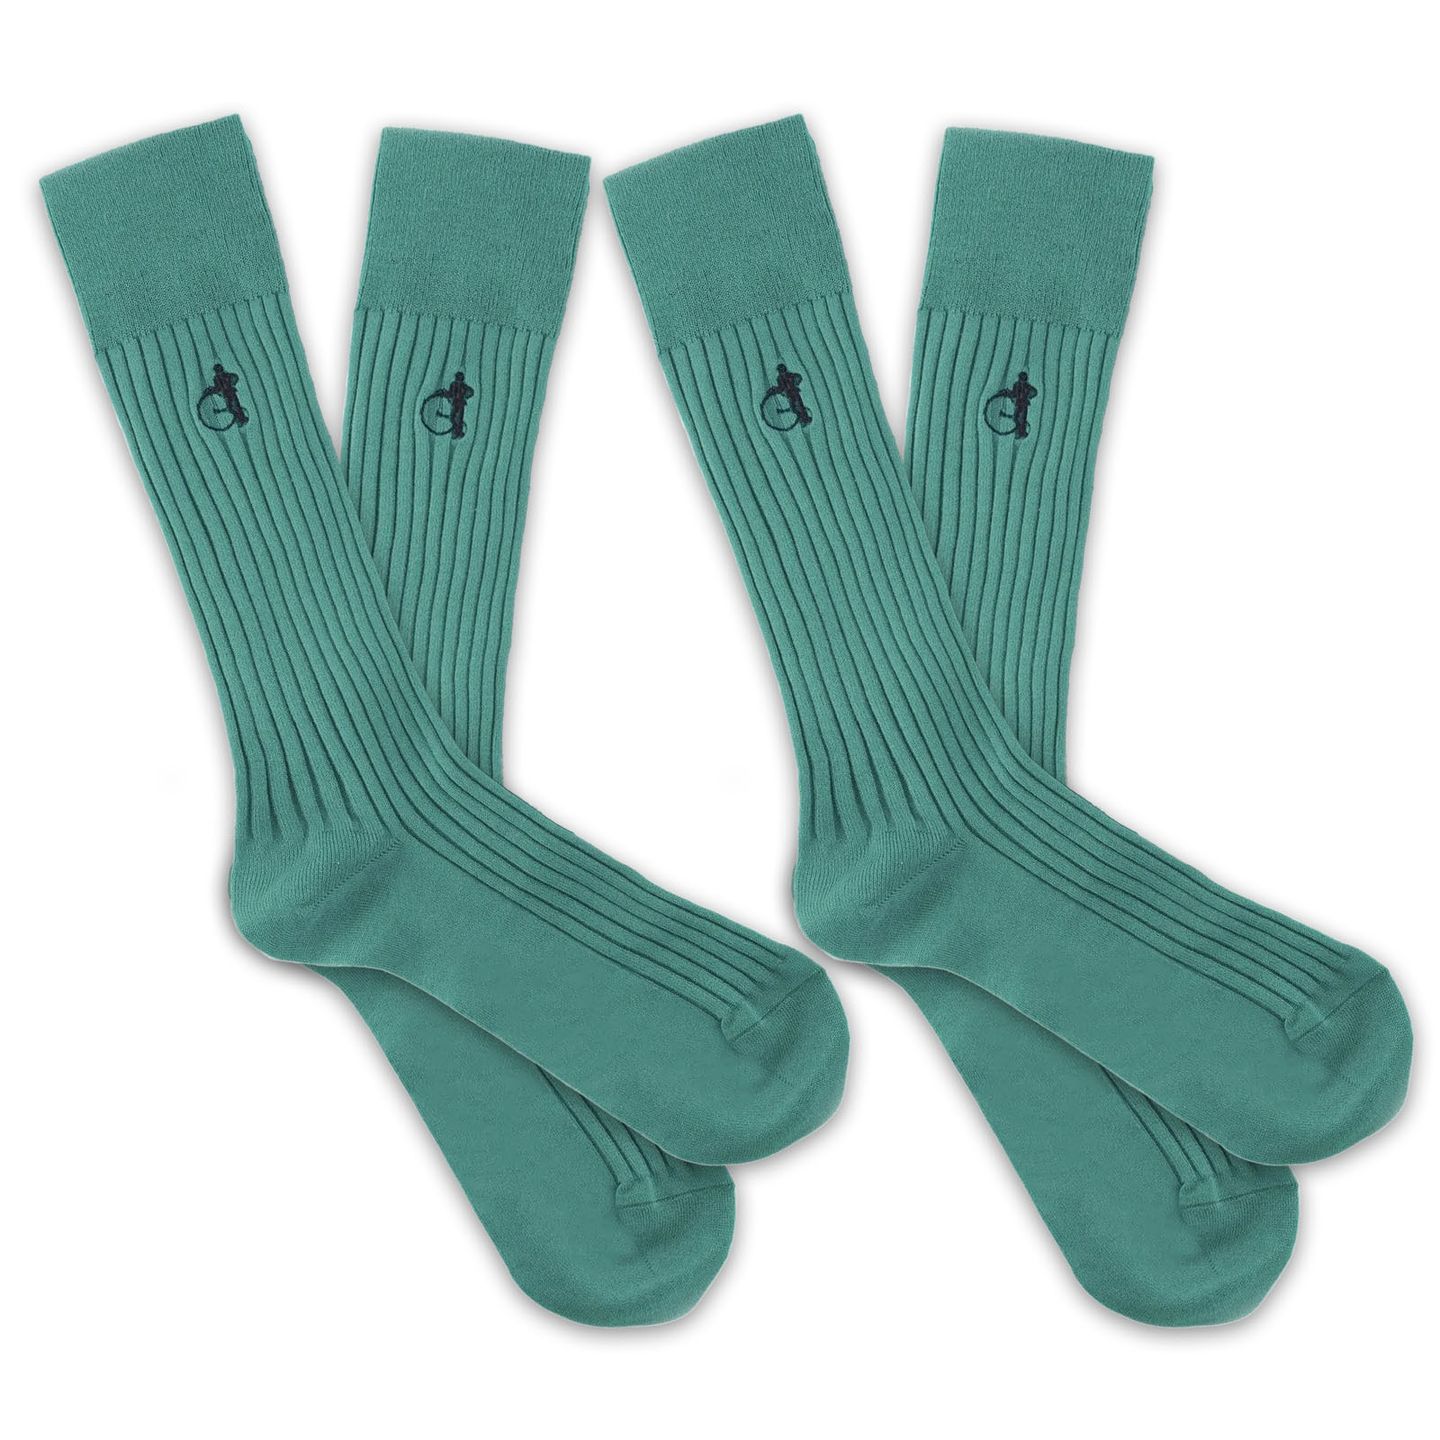 2 pairs of simply sartorial socks in teal